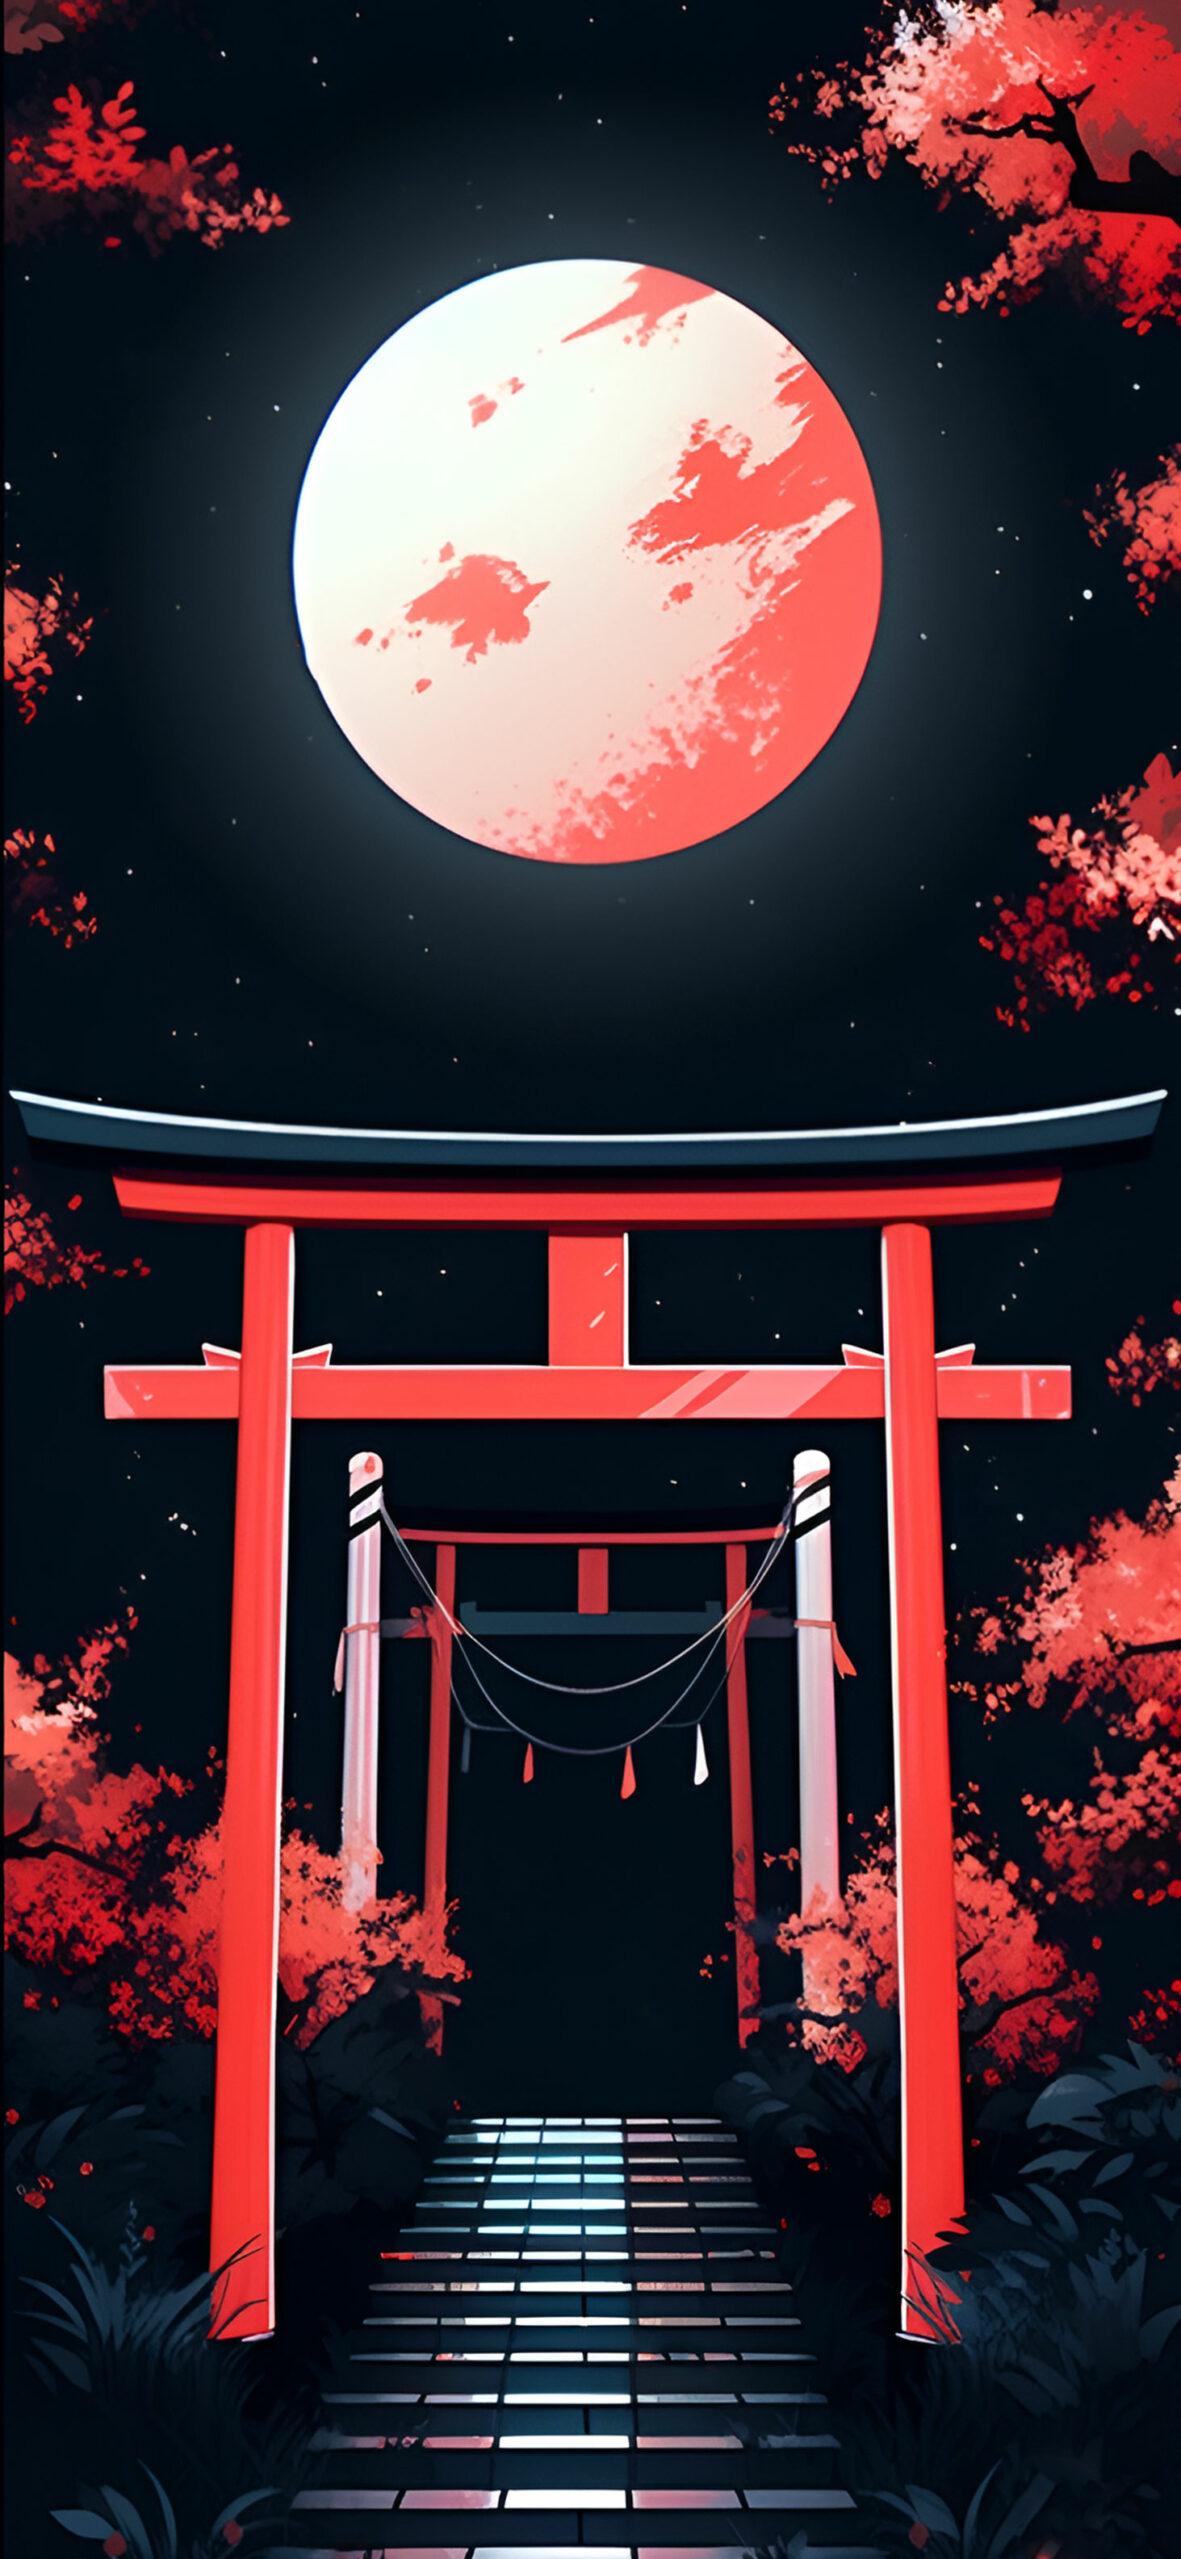 Aesthetic Japanese Arch Full Moon Wallpaper